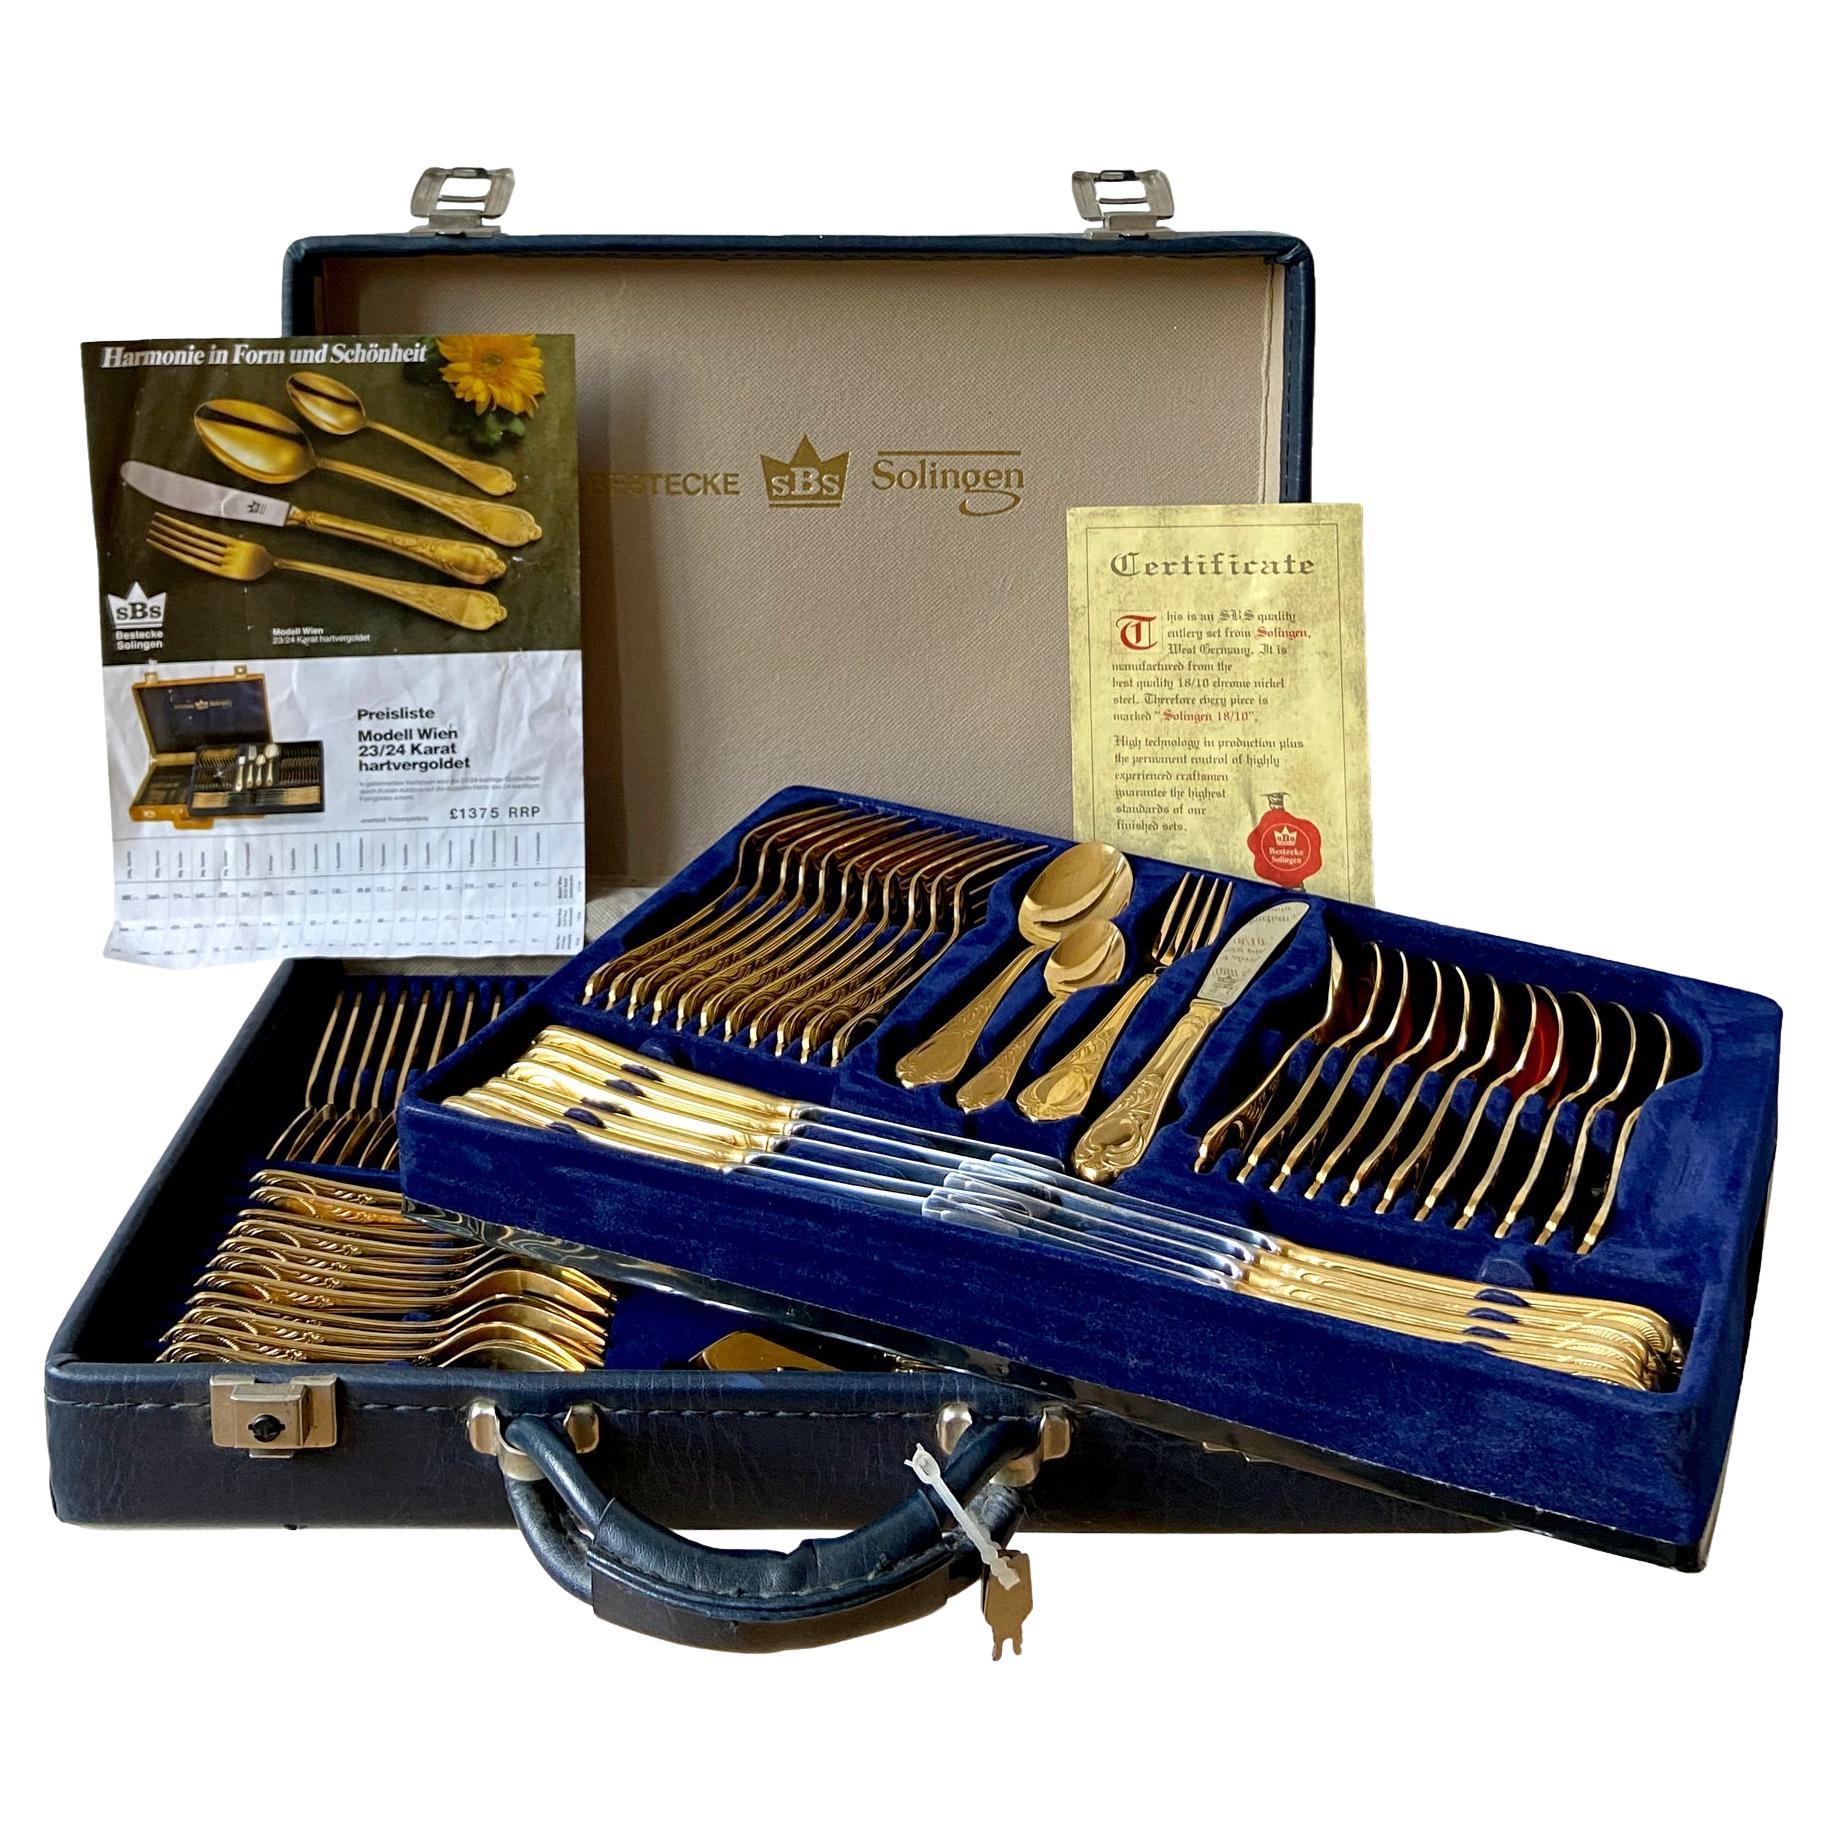 Bestecke Solingen German 23/24 Karat Gold-Plated 70pcs / 12 Person Cutlery Set For Sale